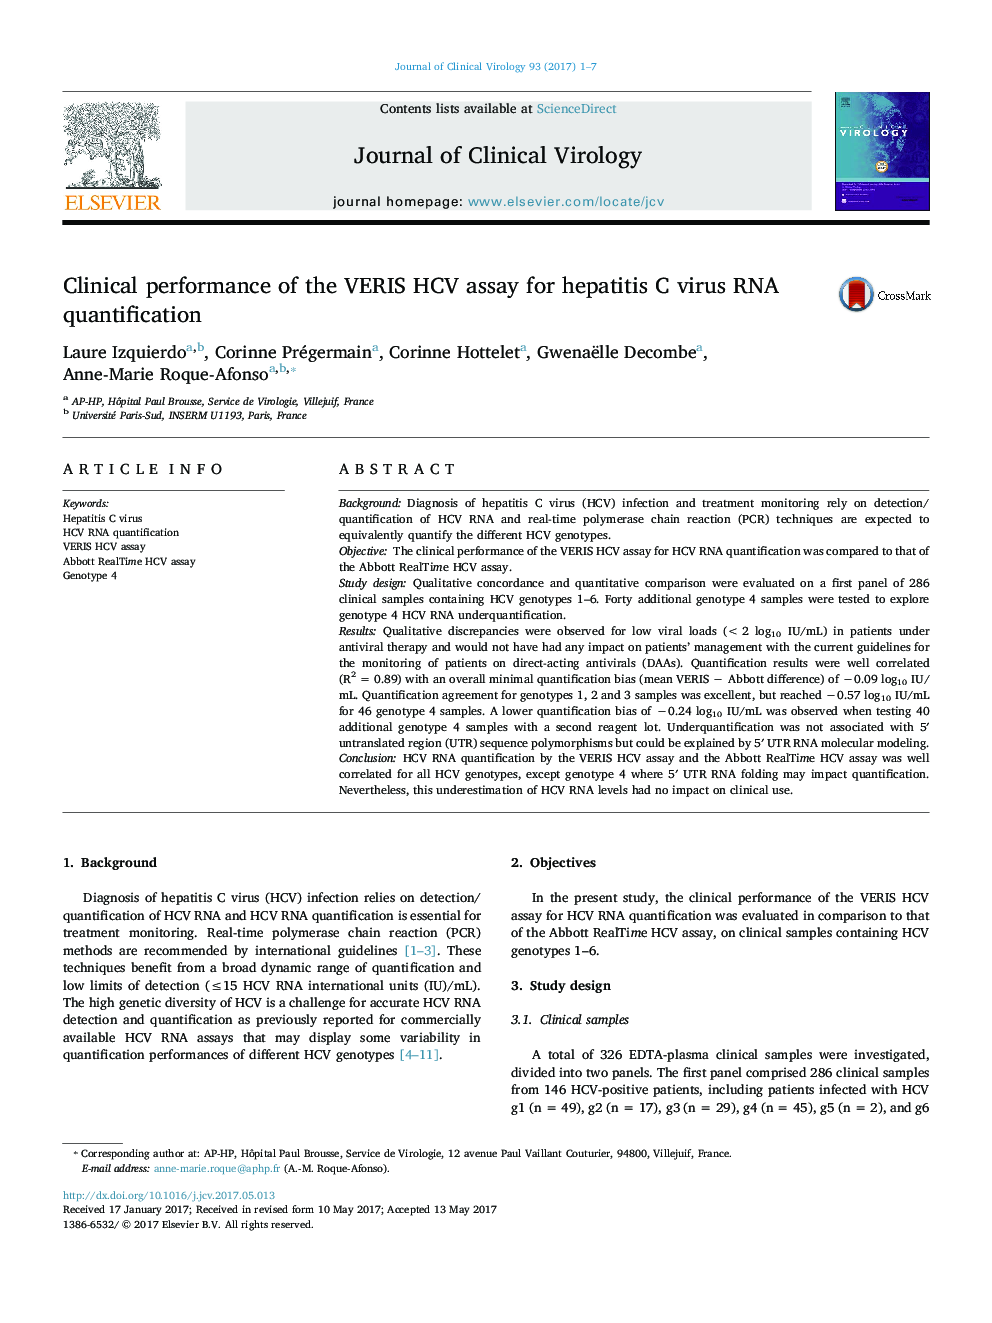 Clinical performance of the VERIS HCV assay for hepatitis C virus RNA quantification